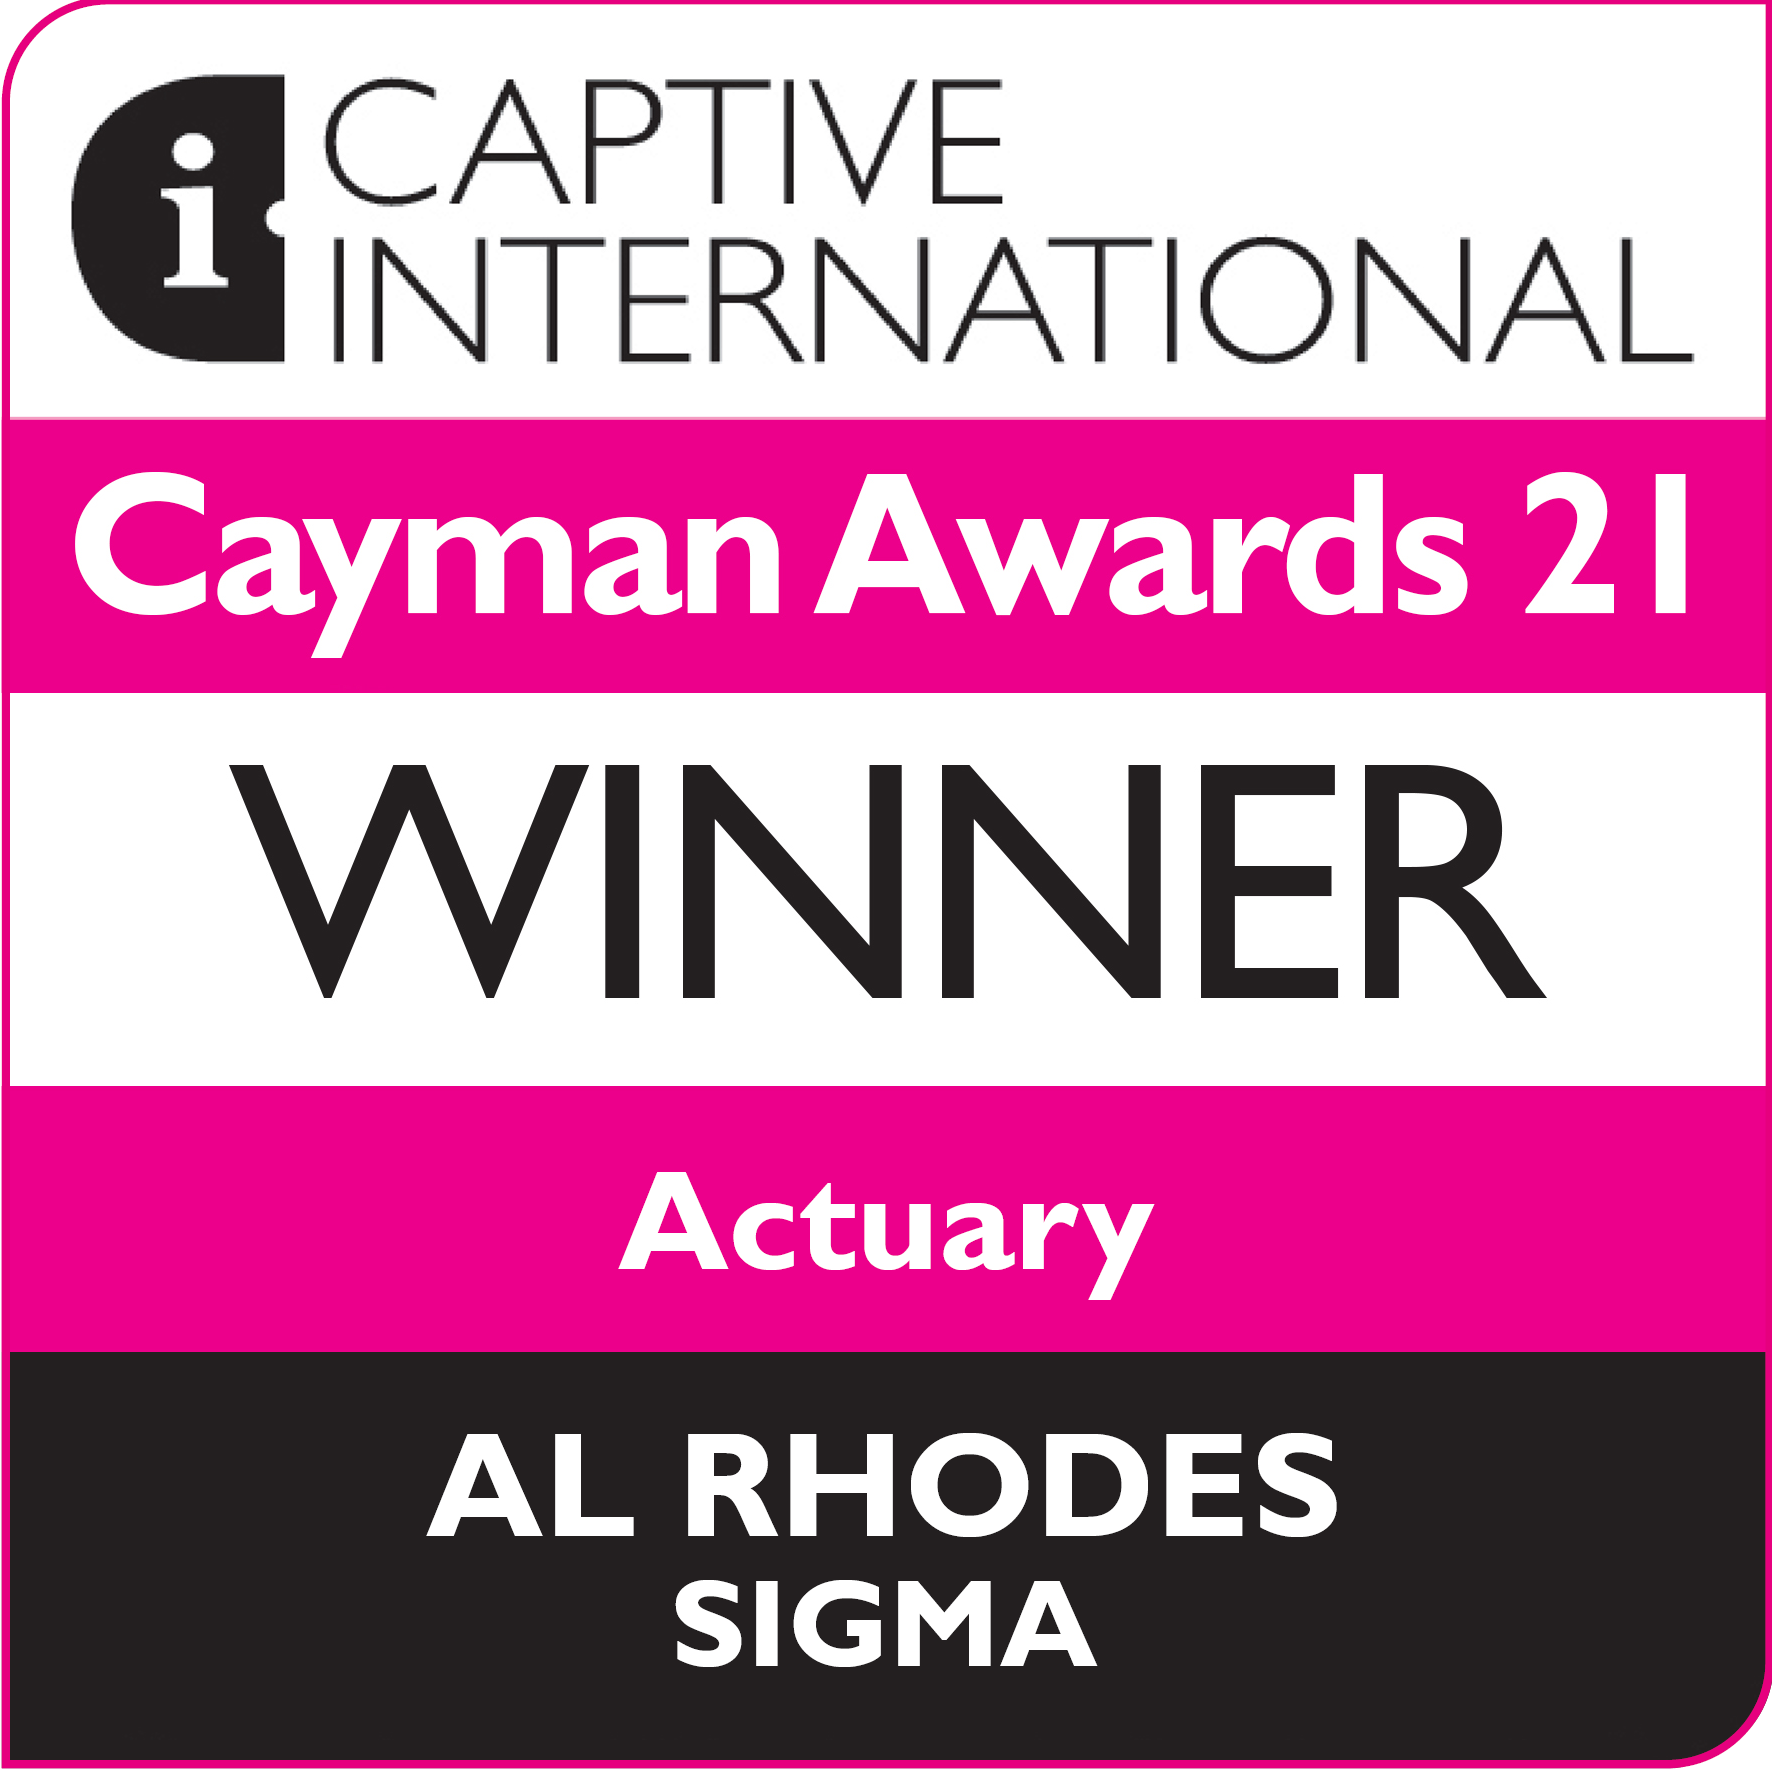 Captive International Cayman Awards Winner